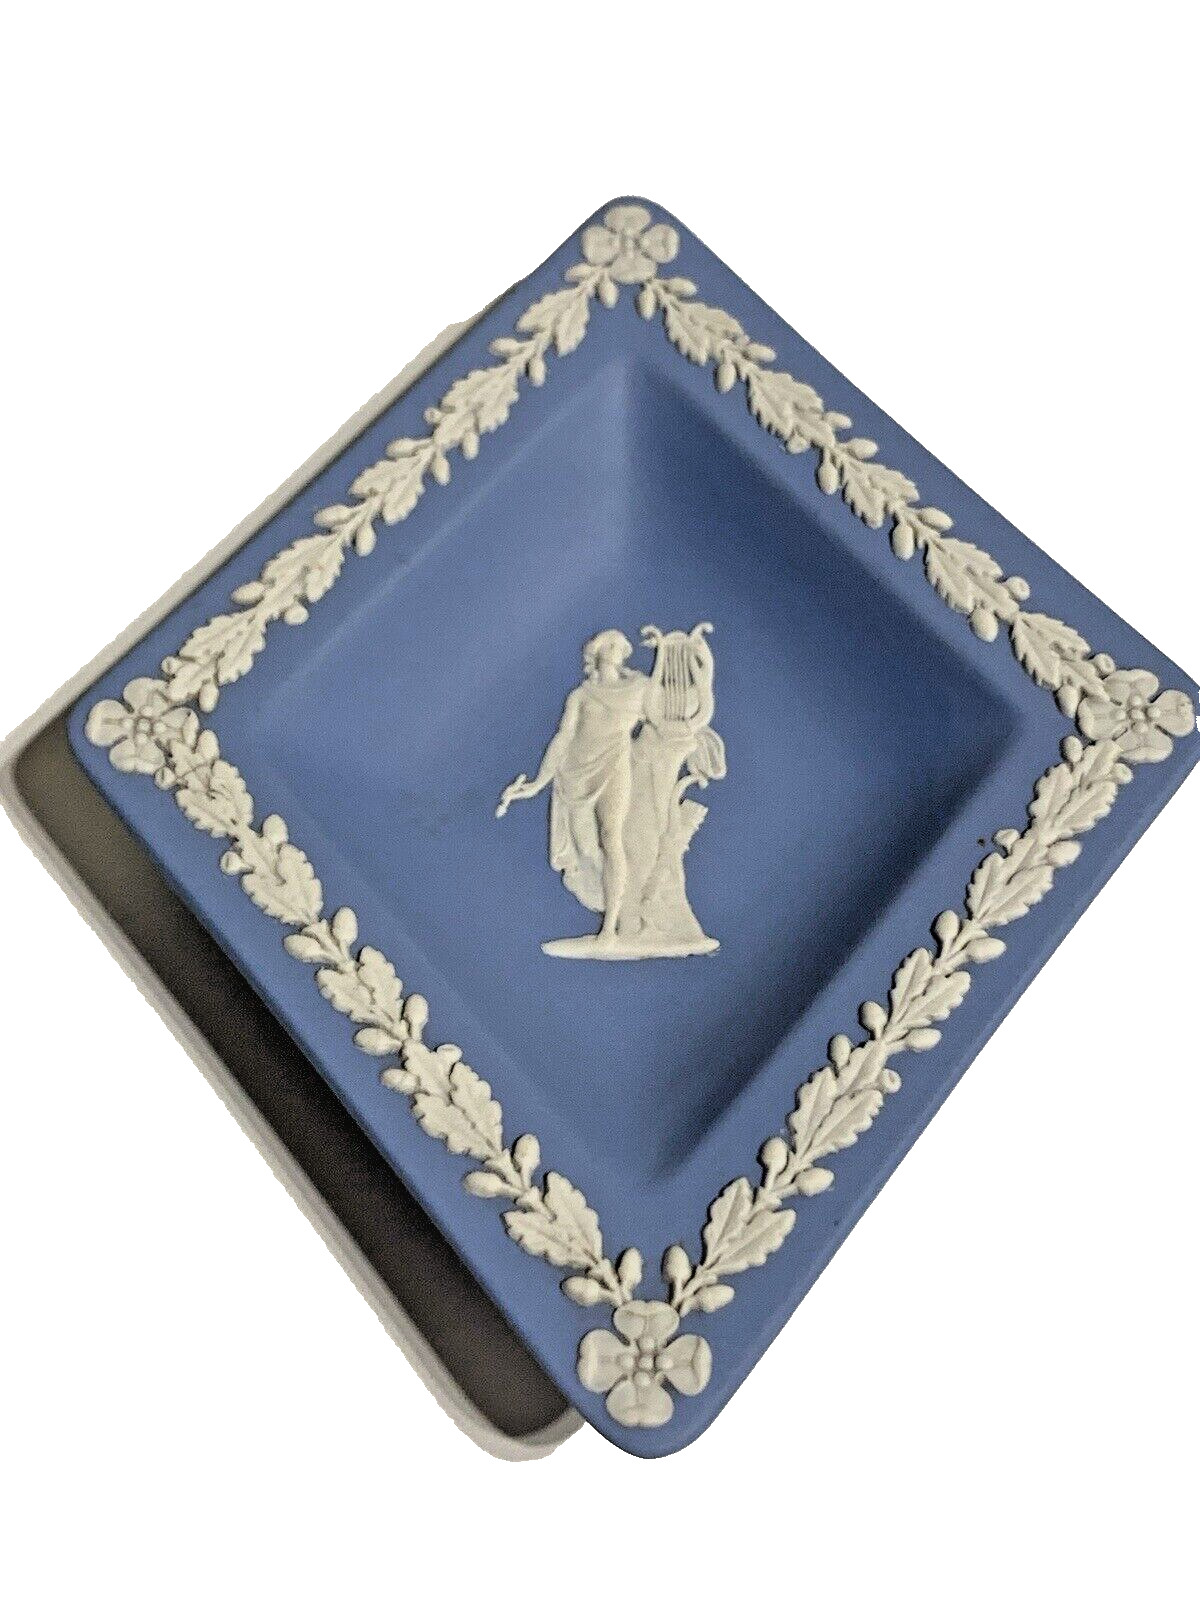 Vintage Wedgwood Jasperware Trinket Dish Blue & White Goddess Harp + Bonus Vase